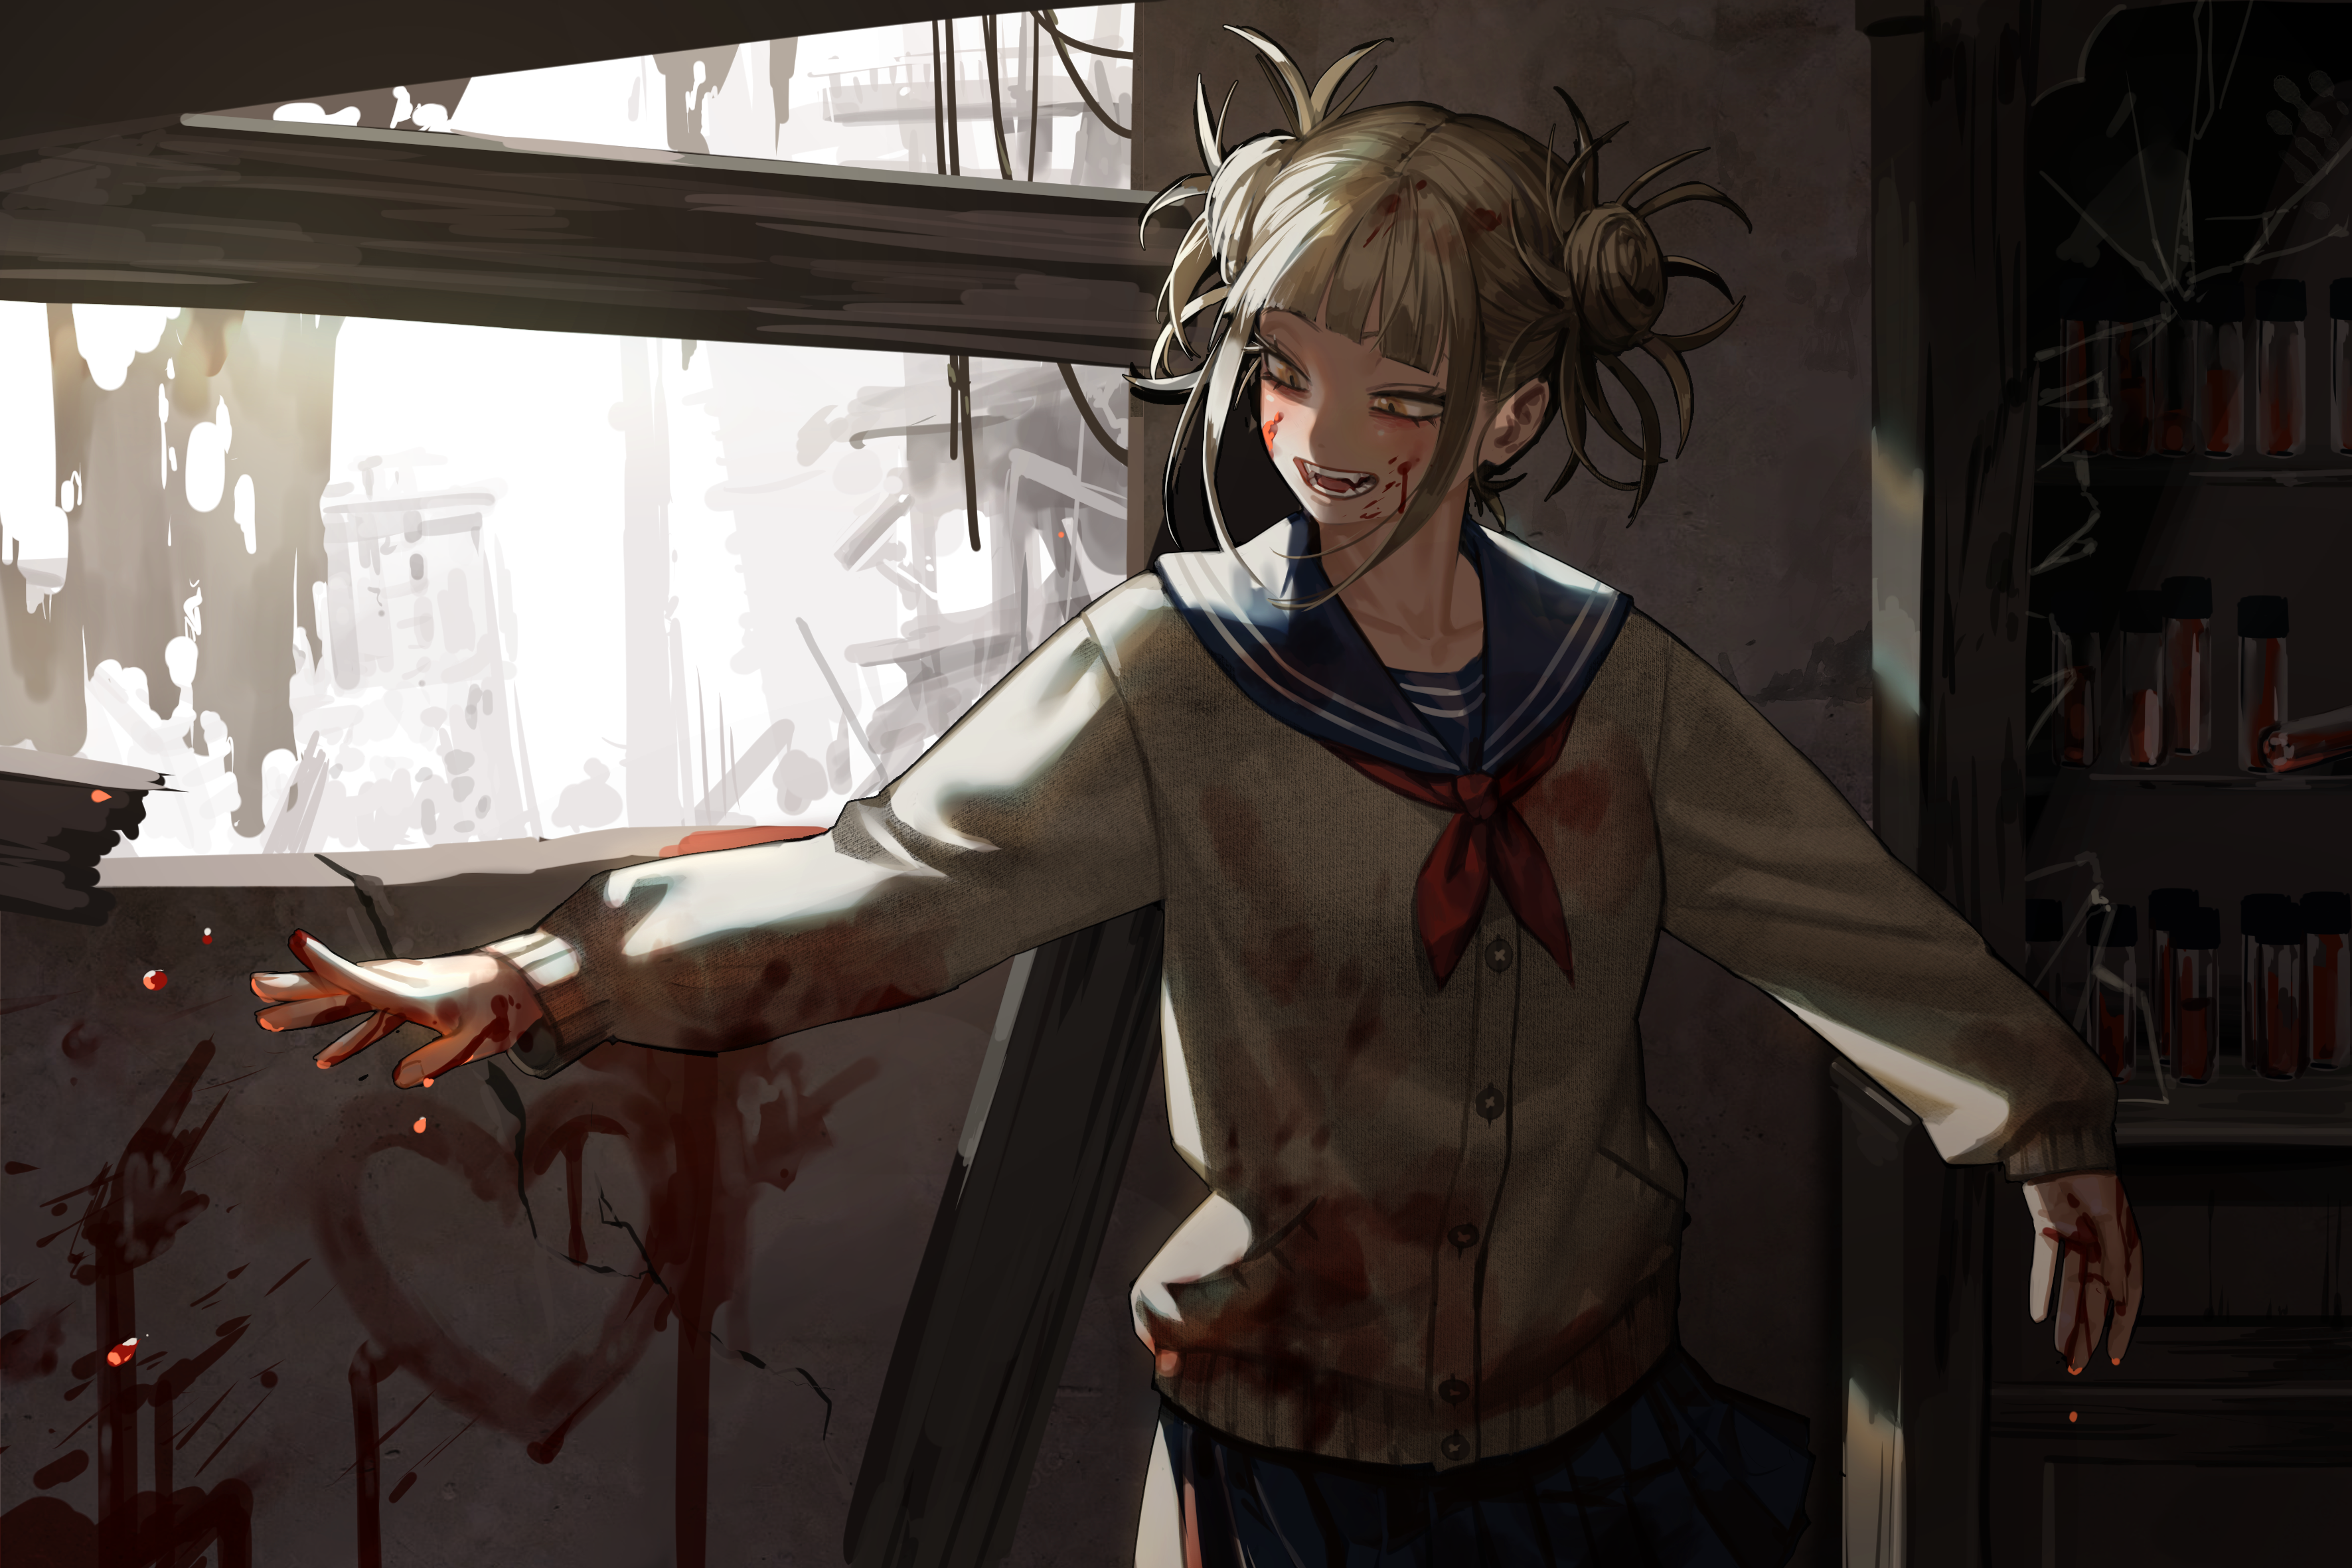 Anime 3543x2362 Boku no Hero Academia Himiko Toga yandere blood heart smiling window splashes abandoned school uniform anime broken glass anime girls